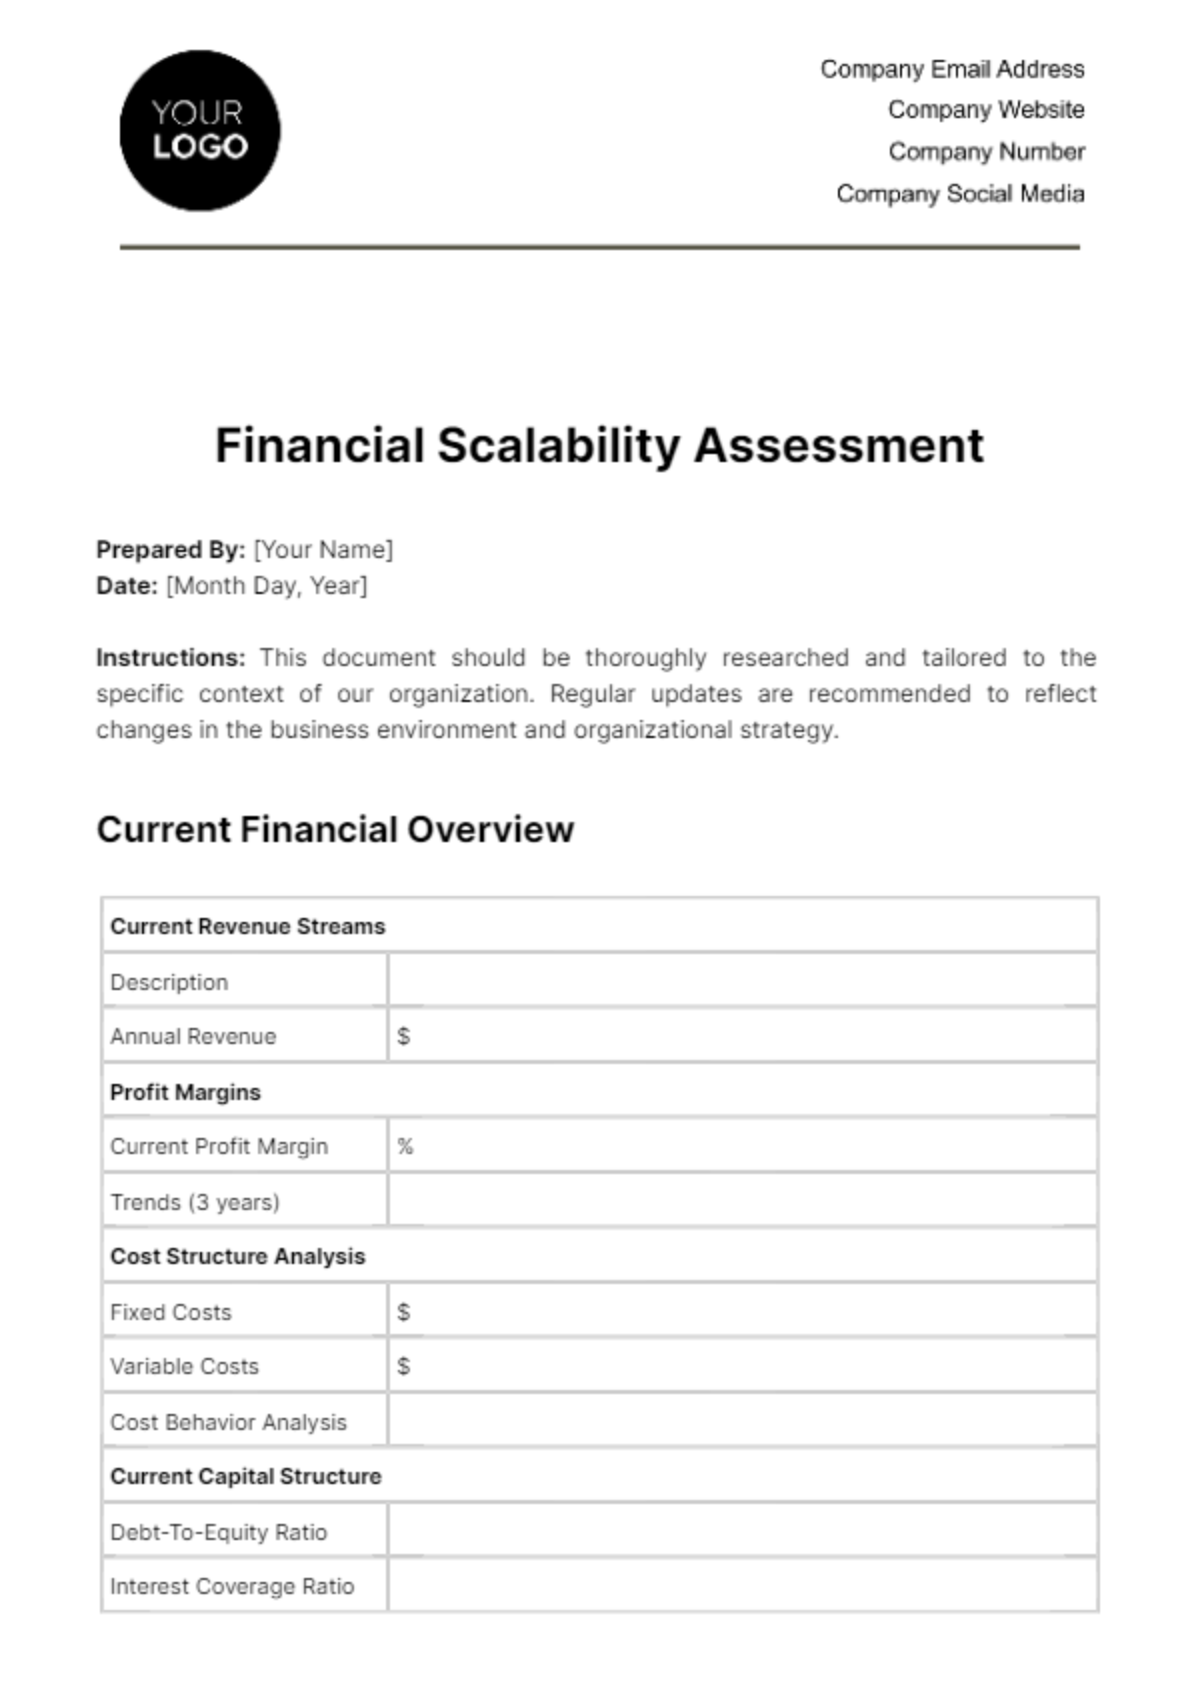 Financial Scalability Assessment Template